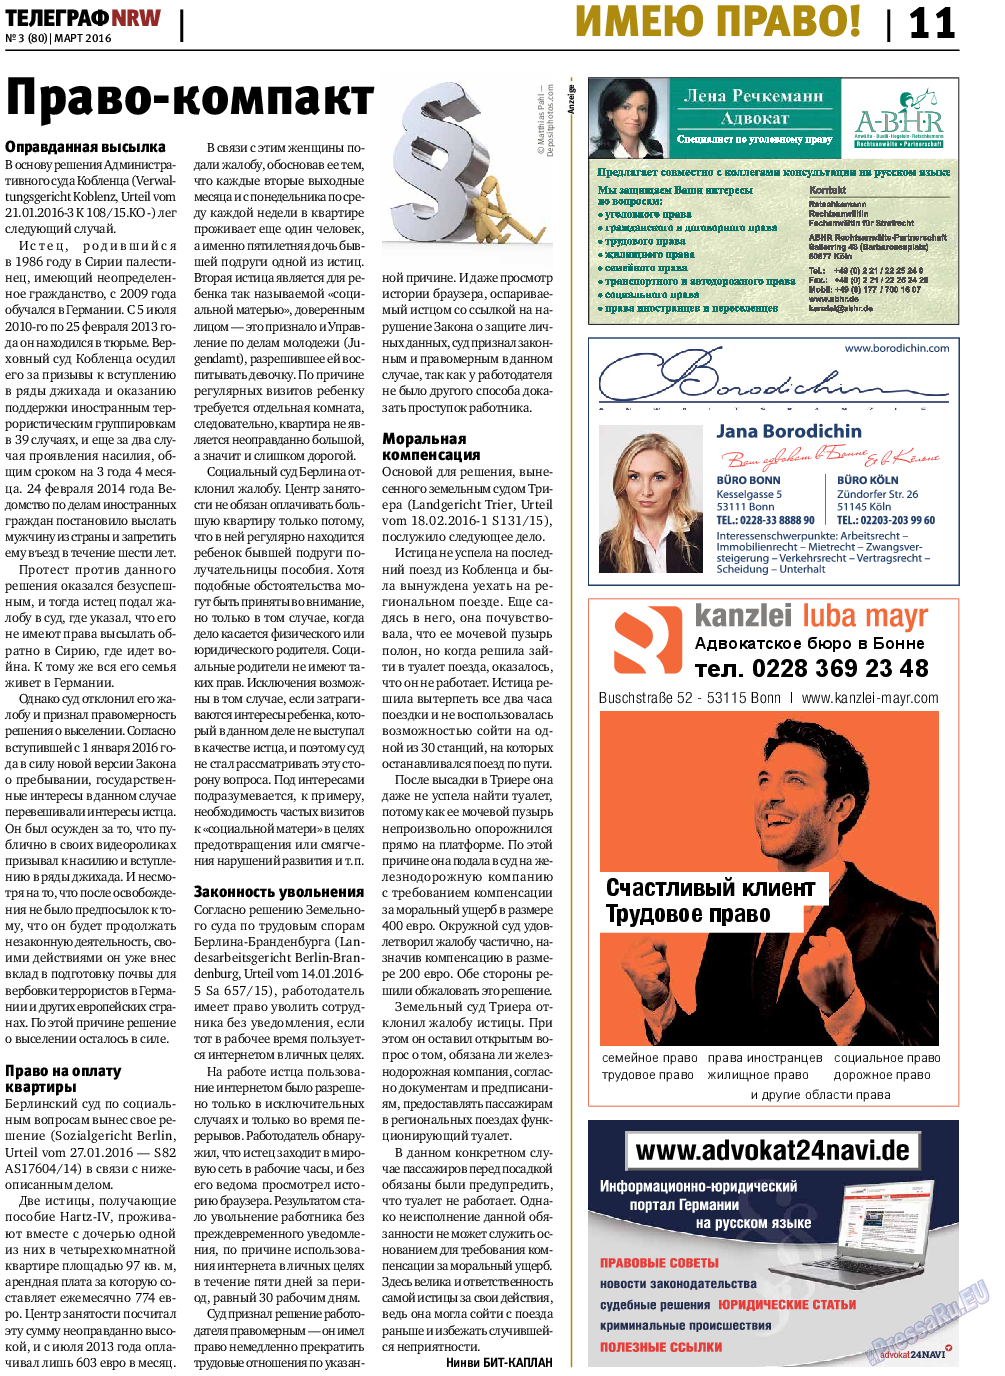 Телеграф NRW, газета. 2016 №3 стр.11